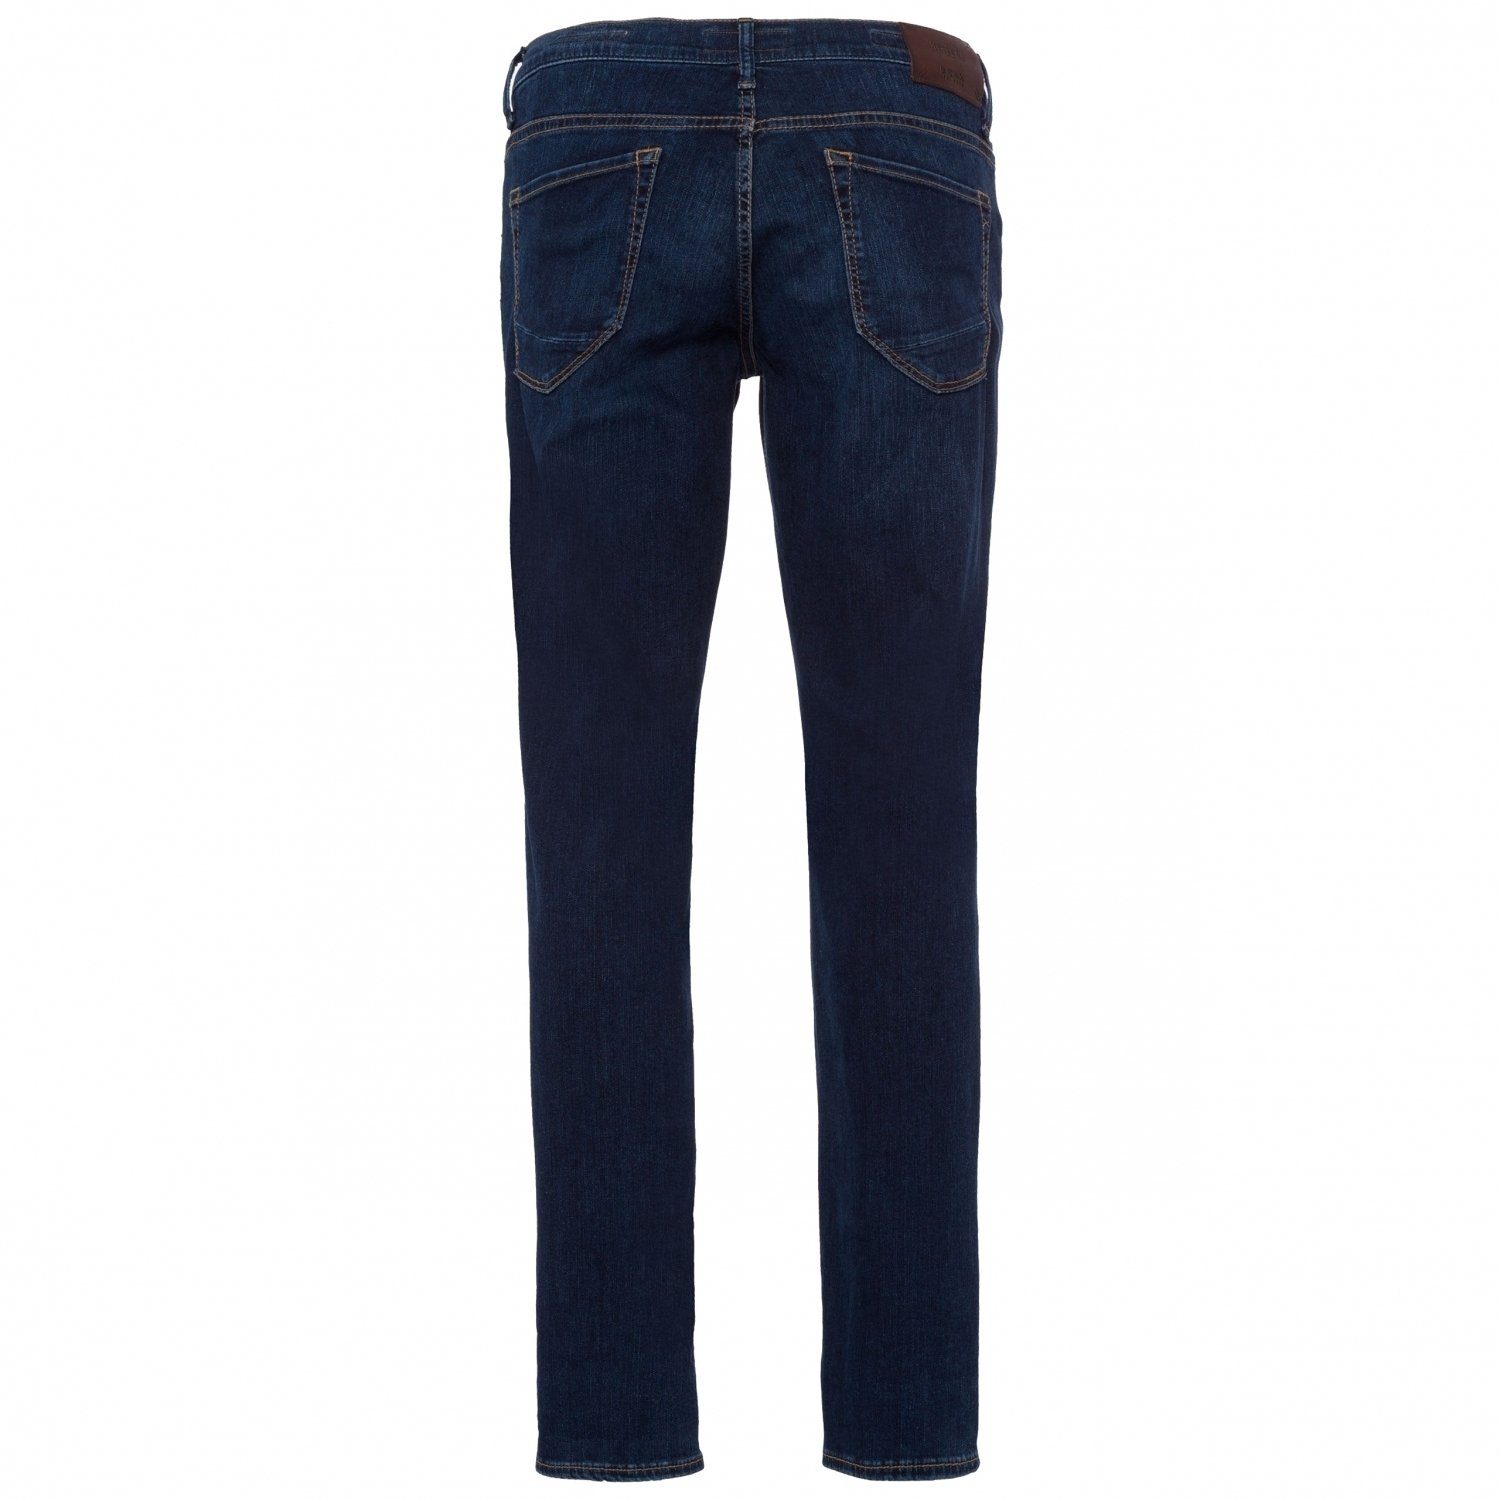 Brax 5-Pocket-Hose Style Chuck Jeans Slim Fit Herren